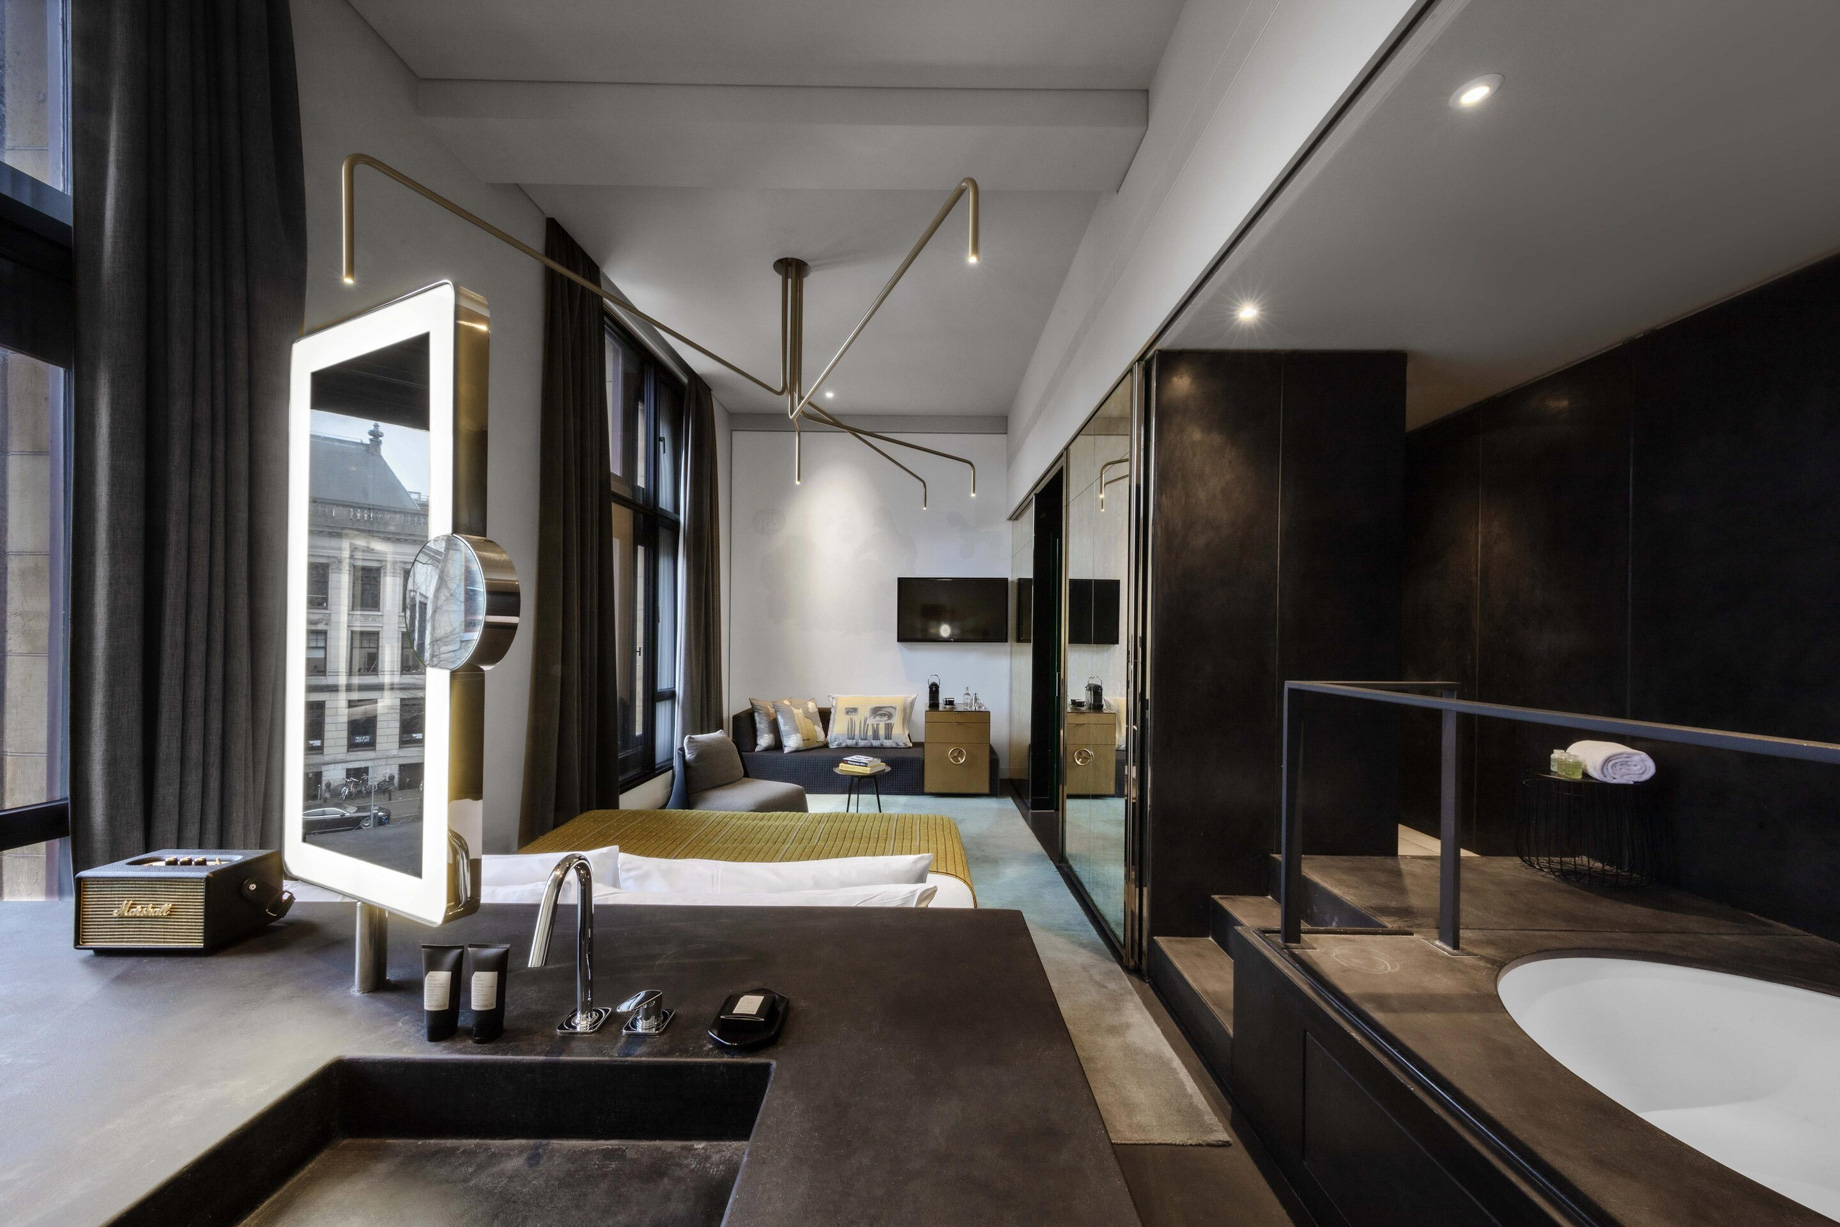 W Amsterdam Hotel – Amsterdam, Netherlands – Fabulous Bank City View Guest Bedroom Vanity